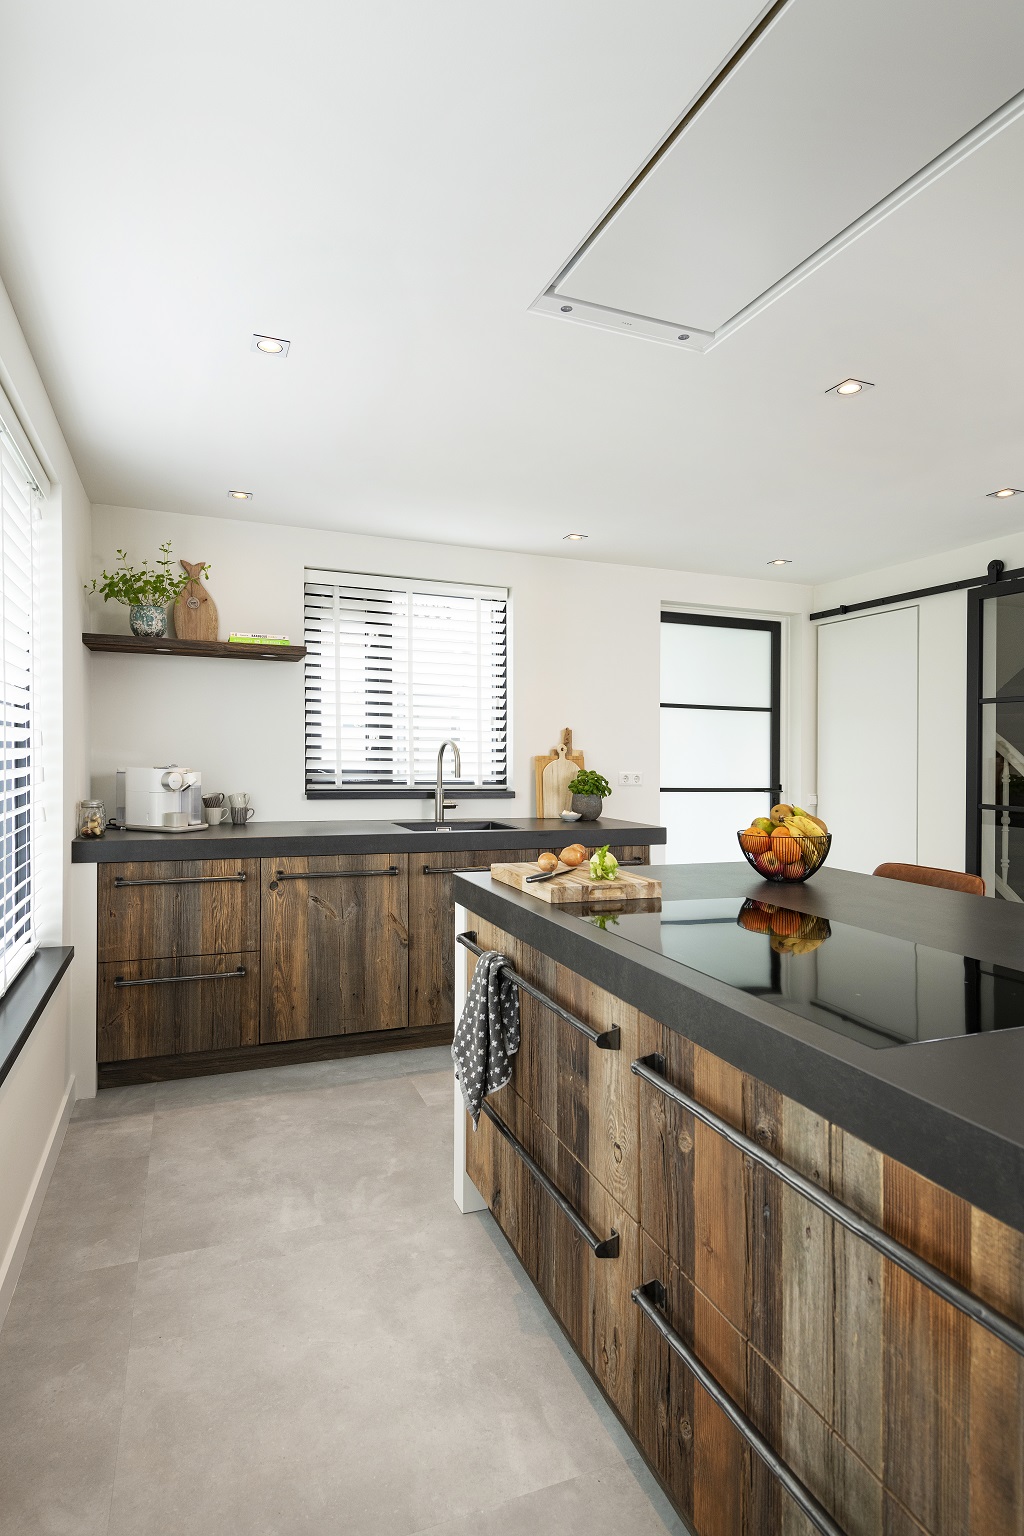 Foto : Moderne barnwood keuken van RestyleXL